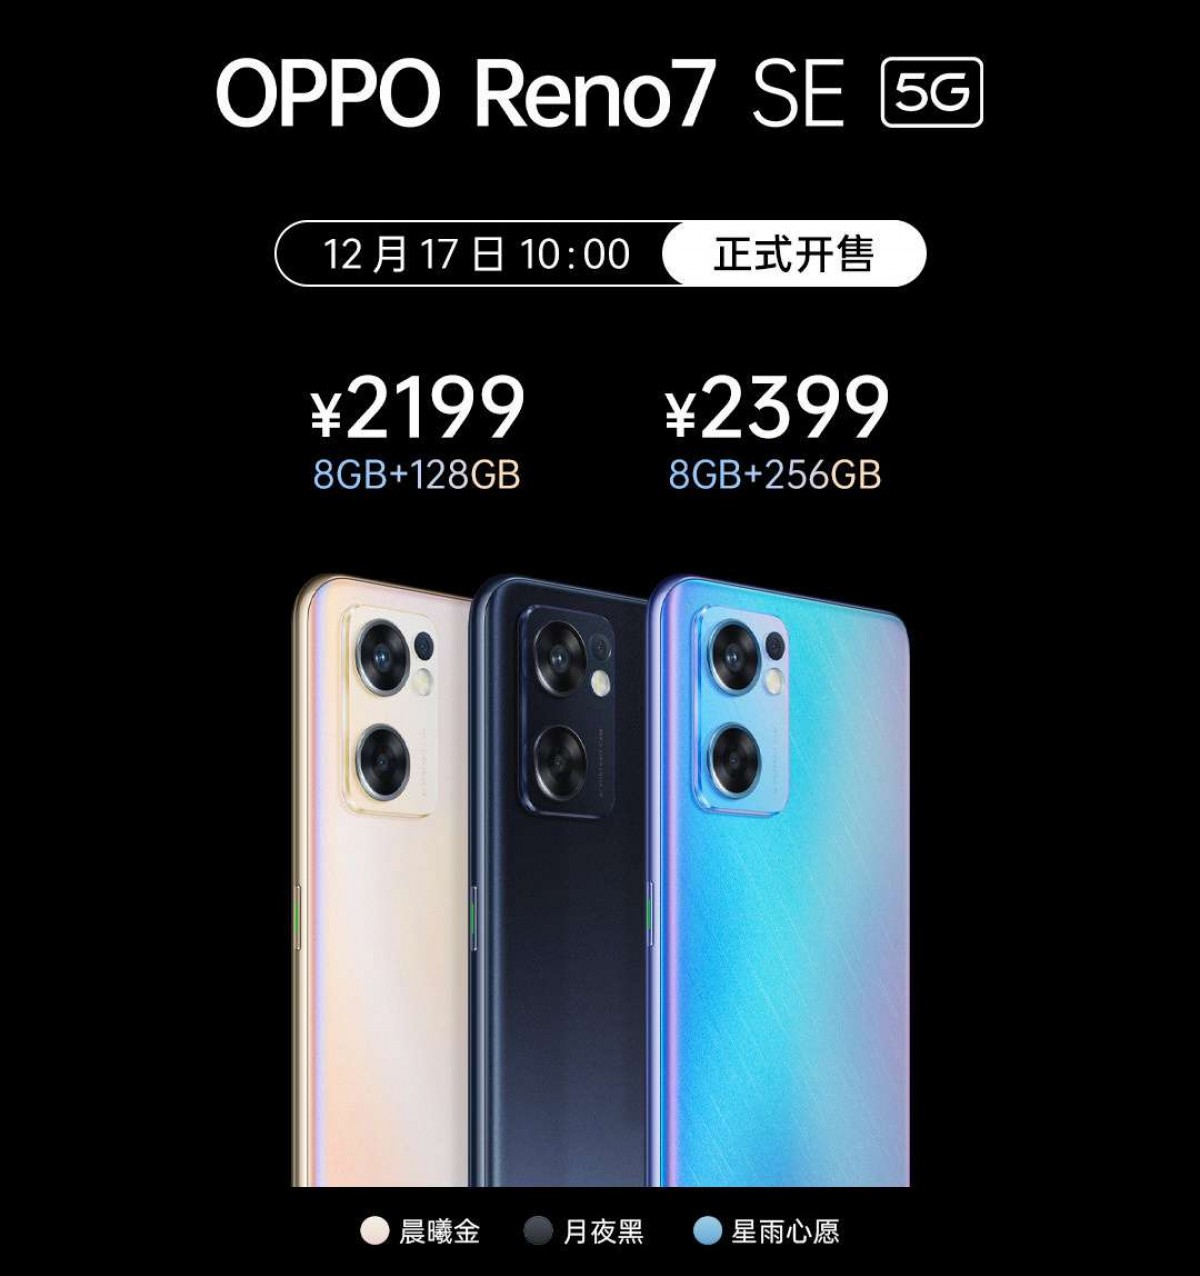 Oppo Reno7 SE 5G